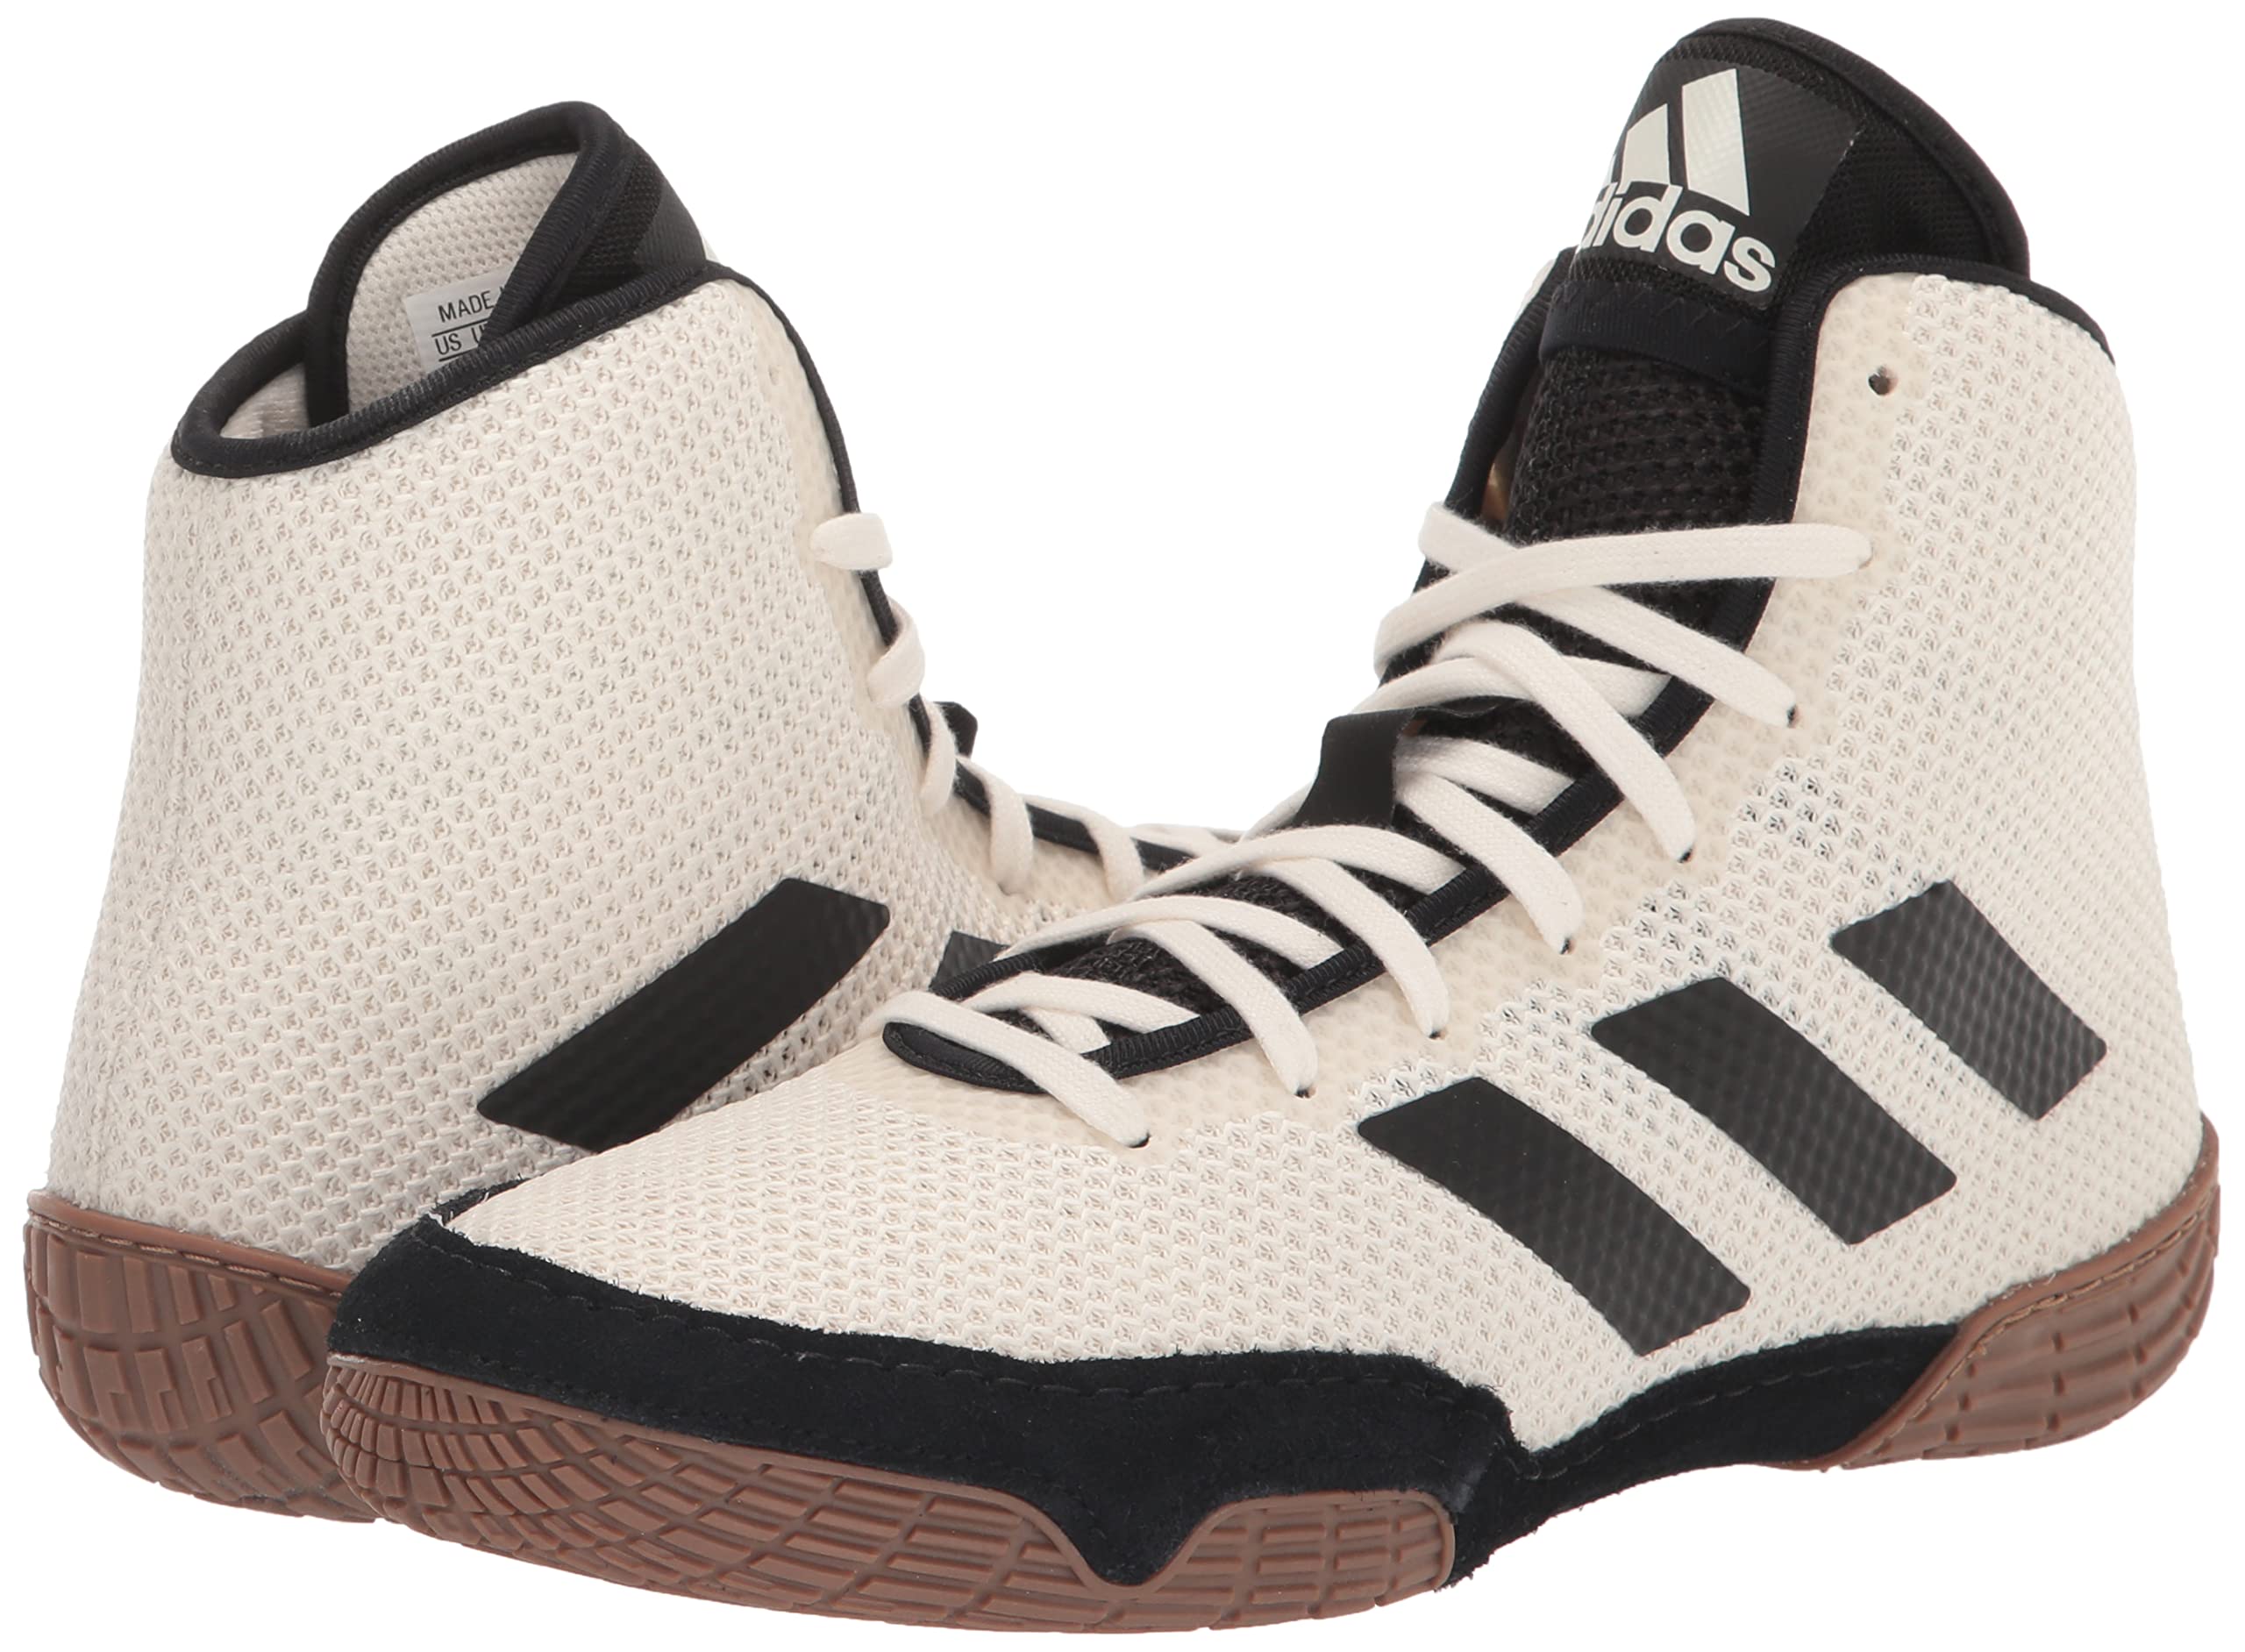 adidas Men's Tech Fall 2.0 Wrestling Shoe